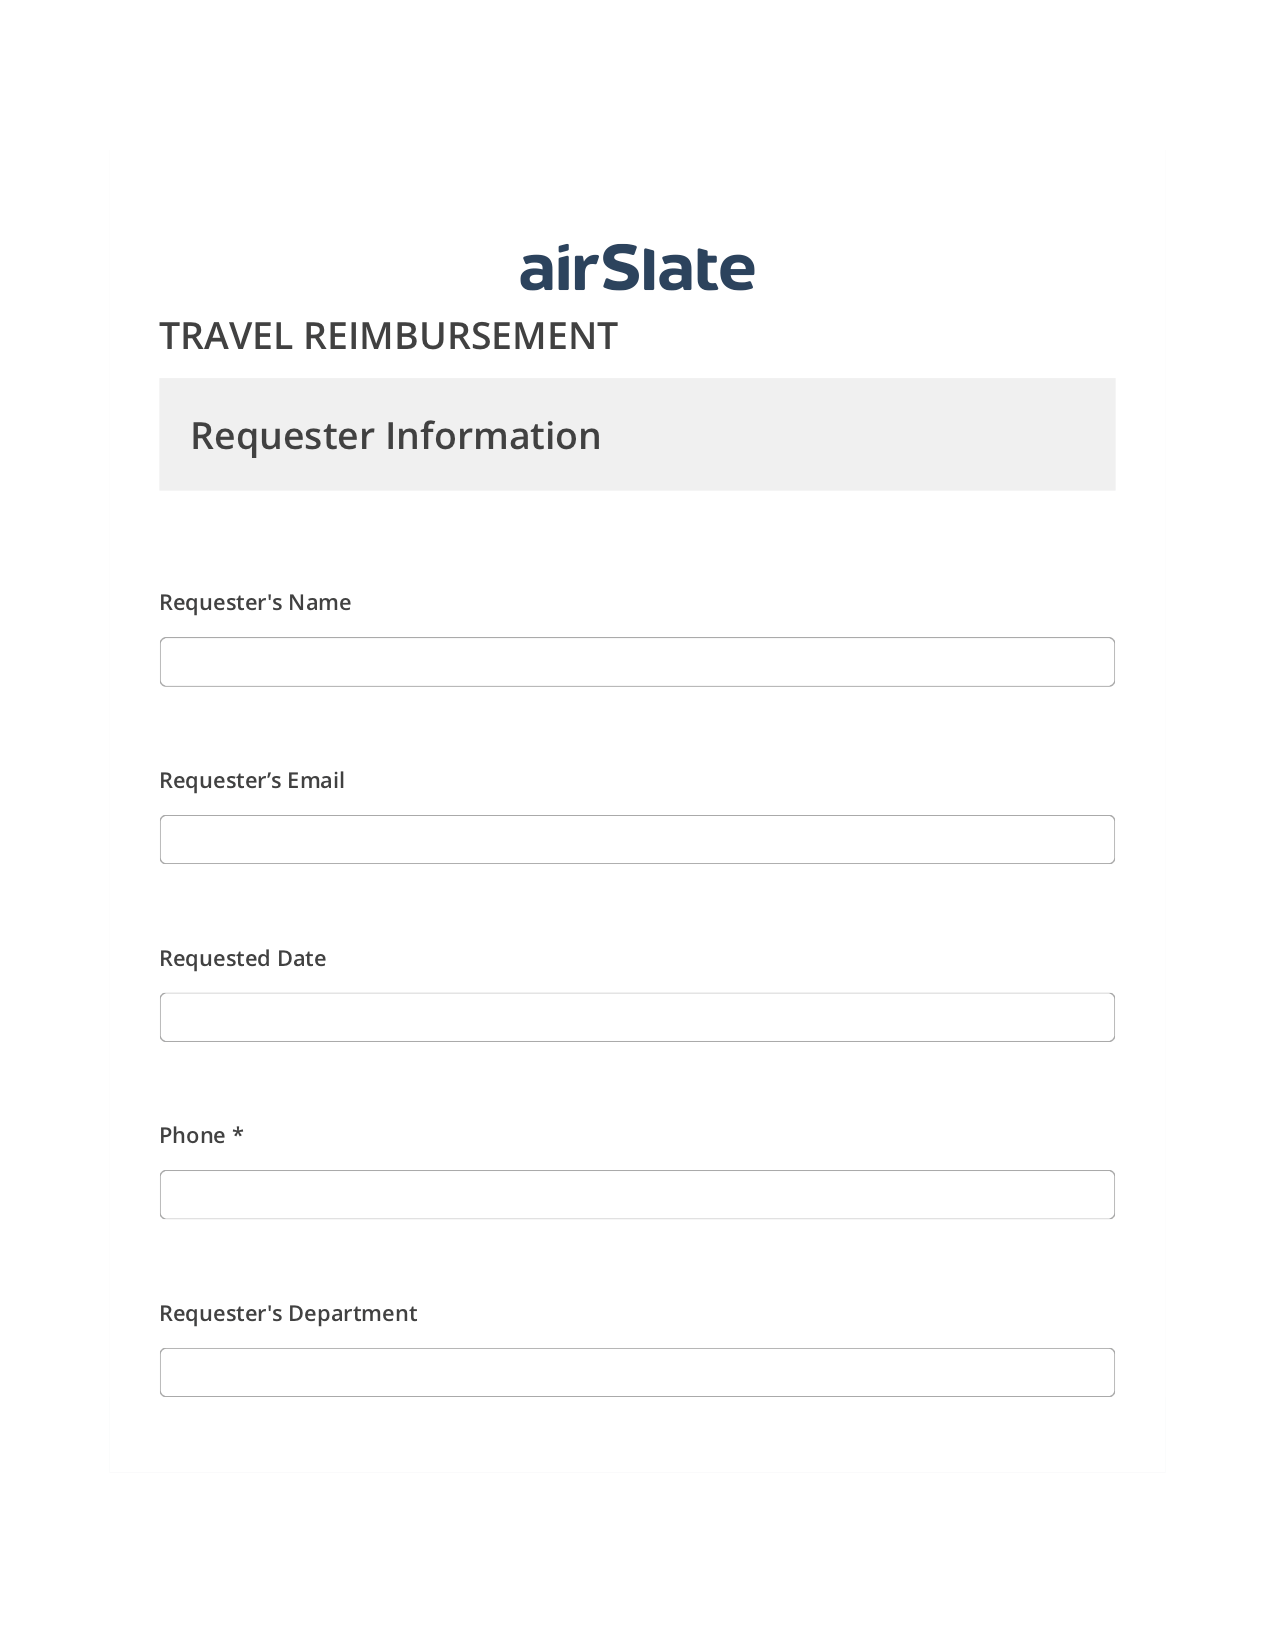 Travel Reimbursement Flow Pre-fill from MySQL Bot